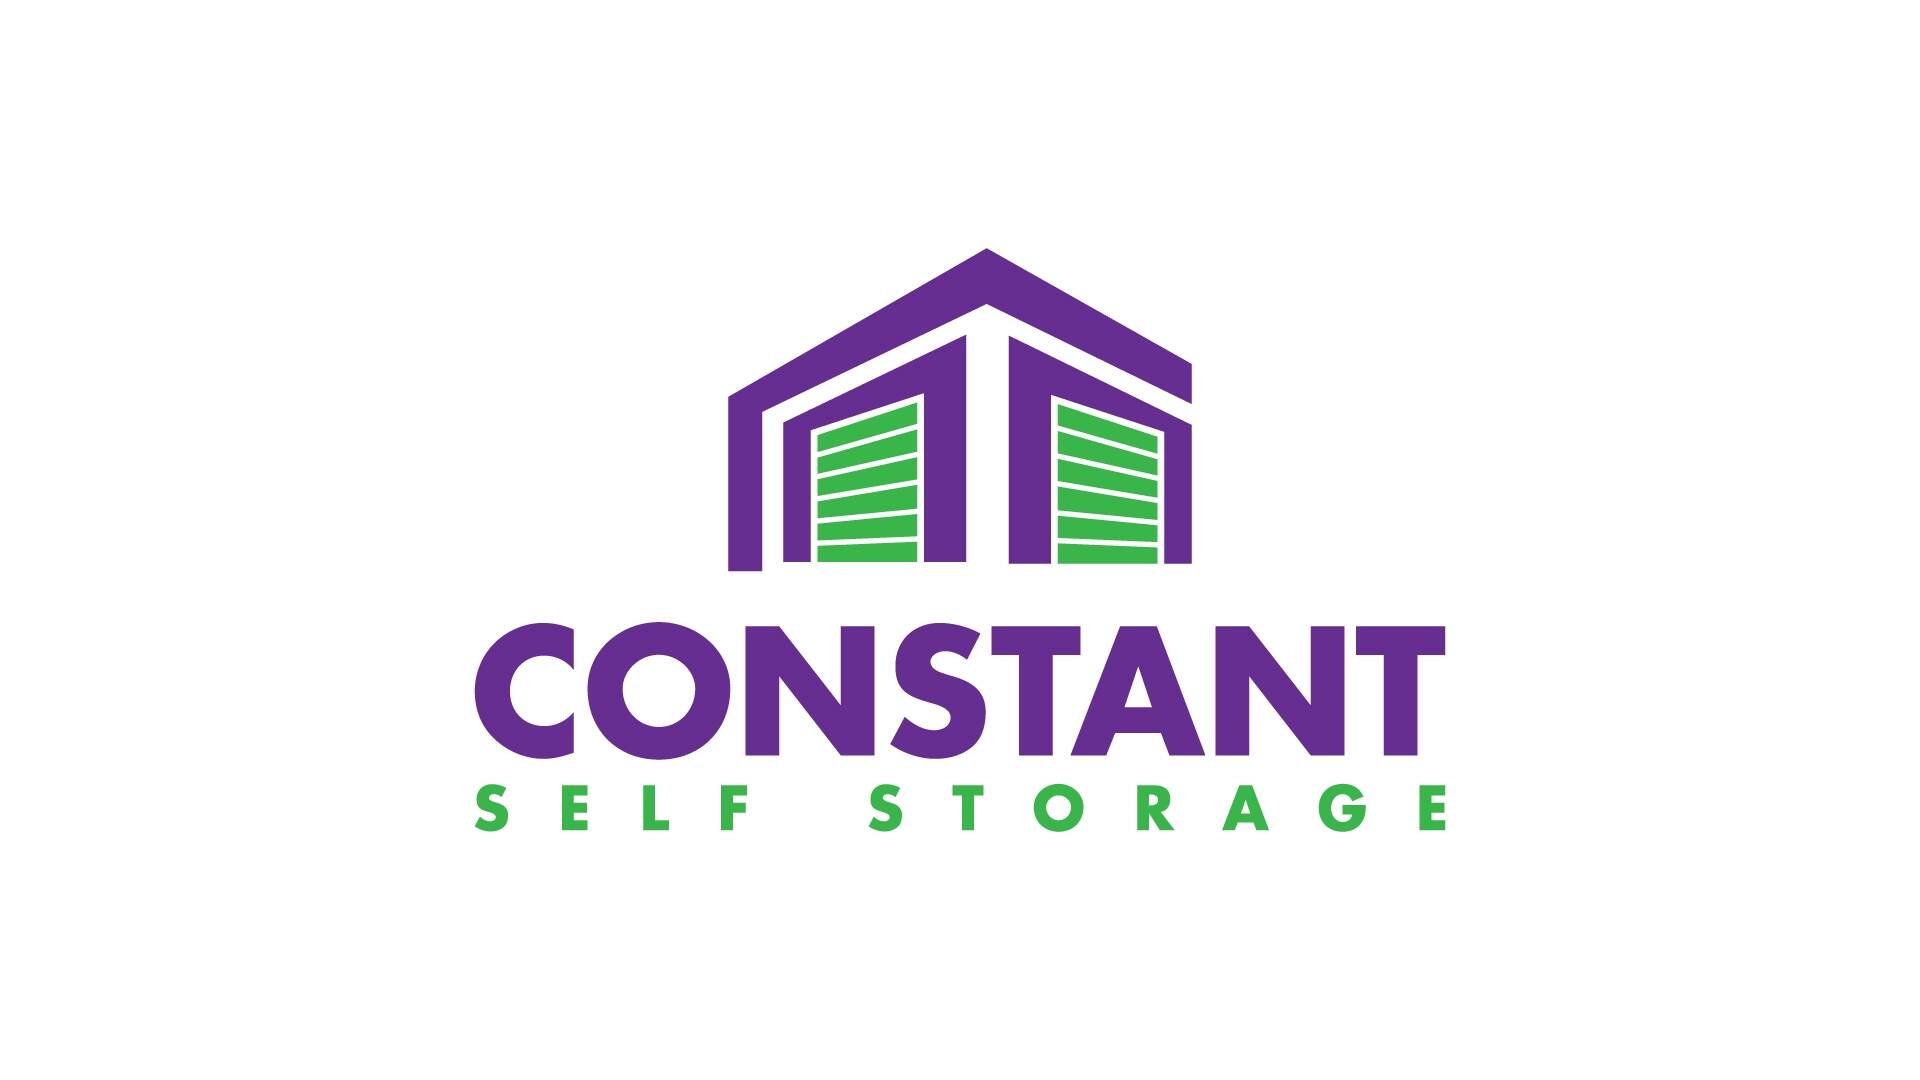 Constant Self Storage